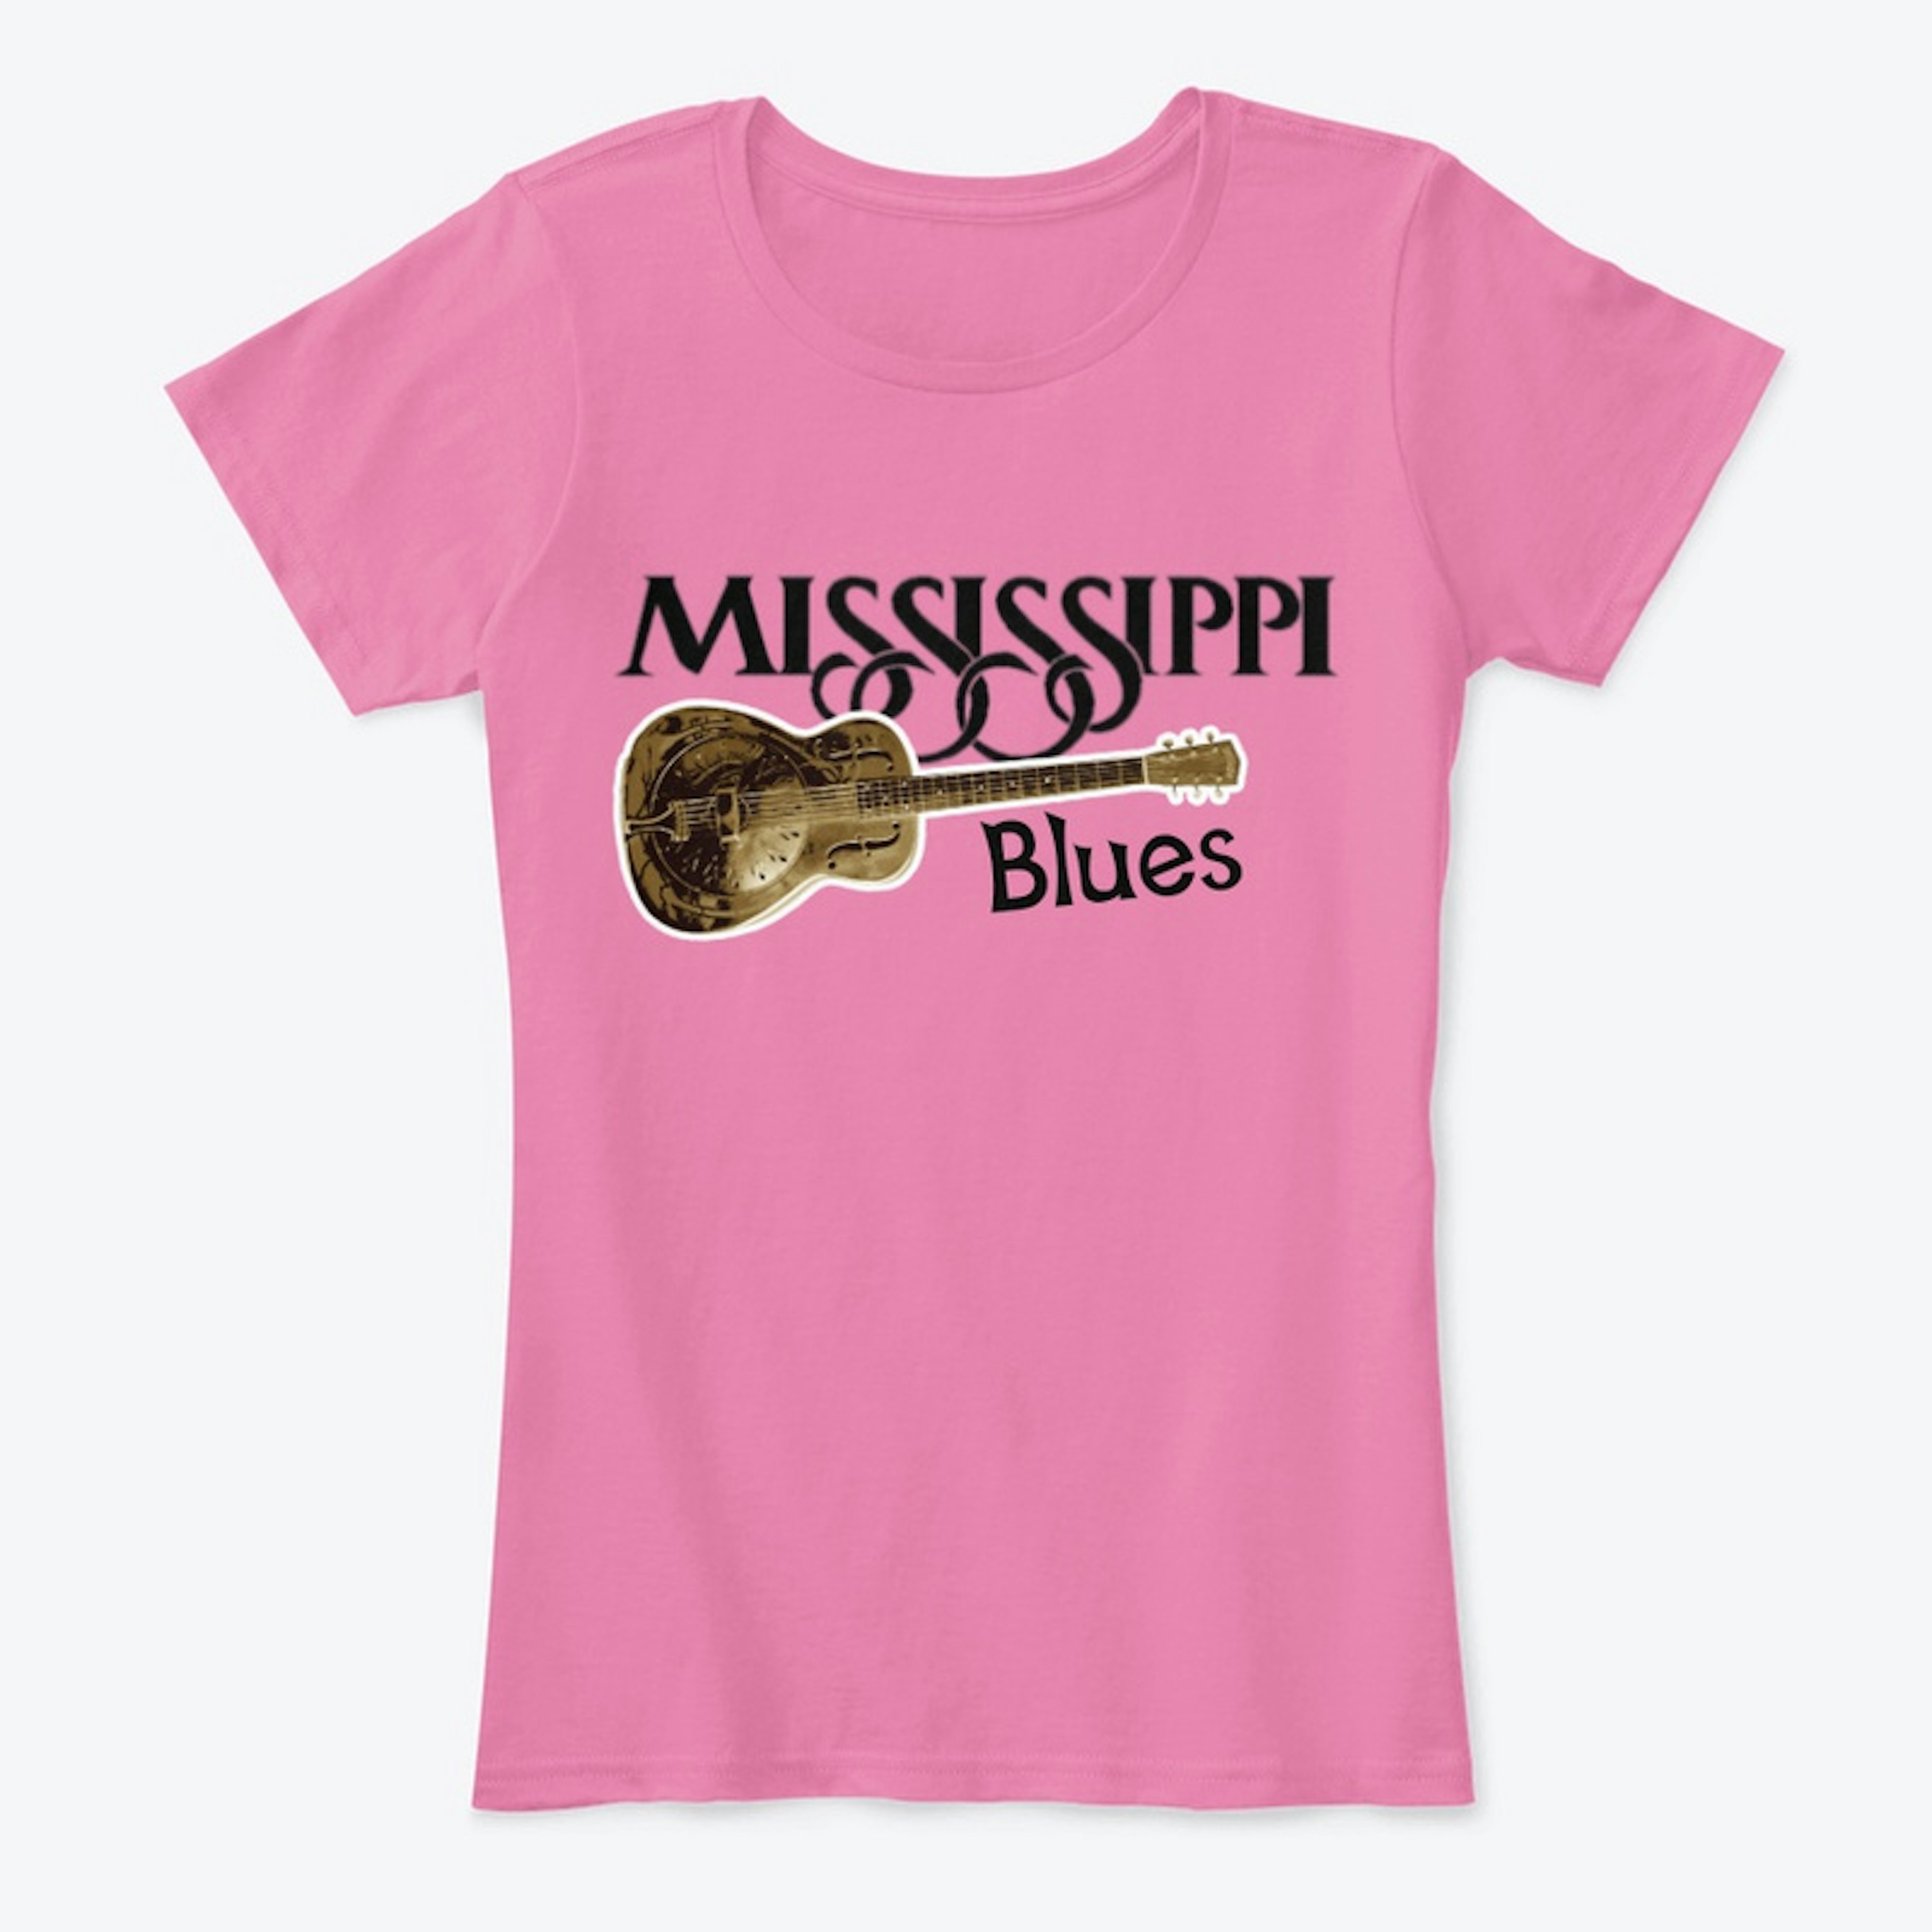  Mississippi blues